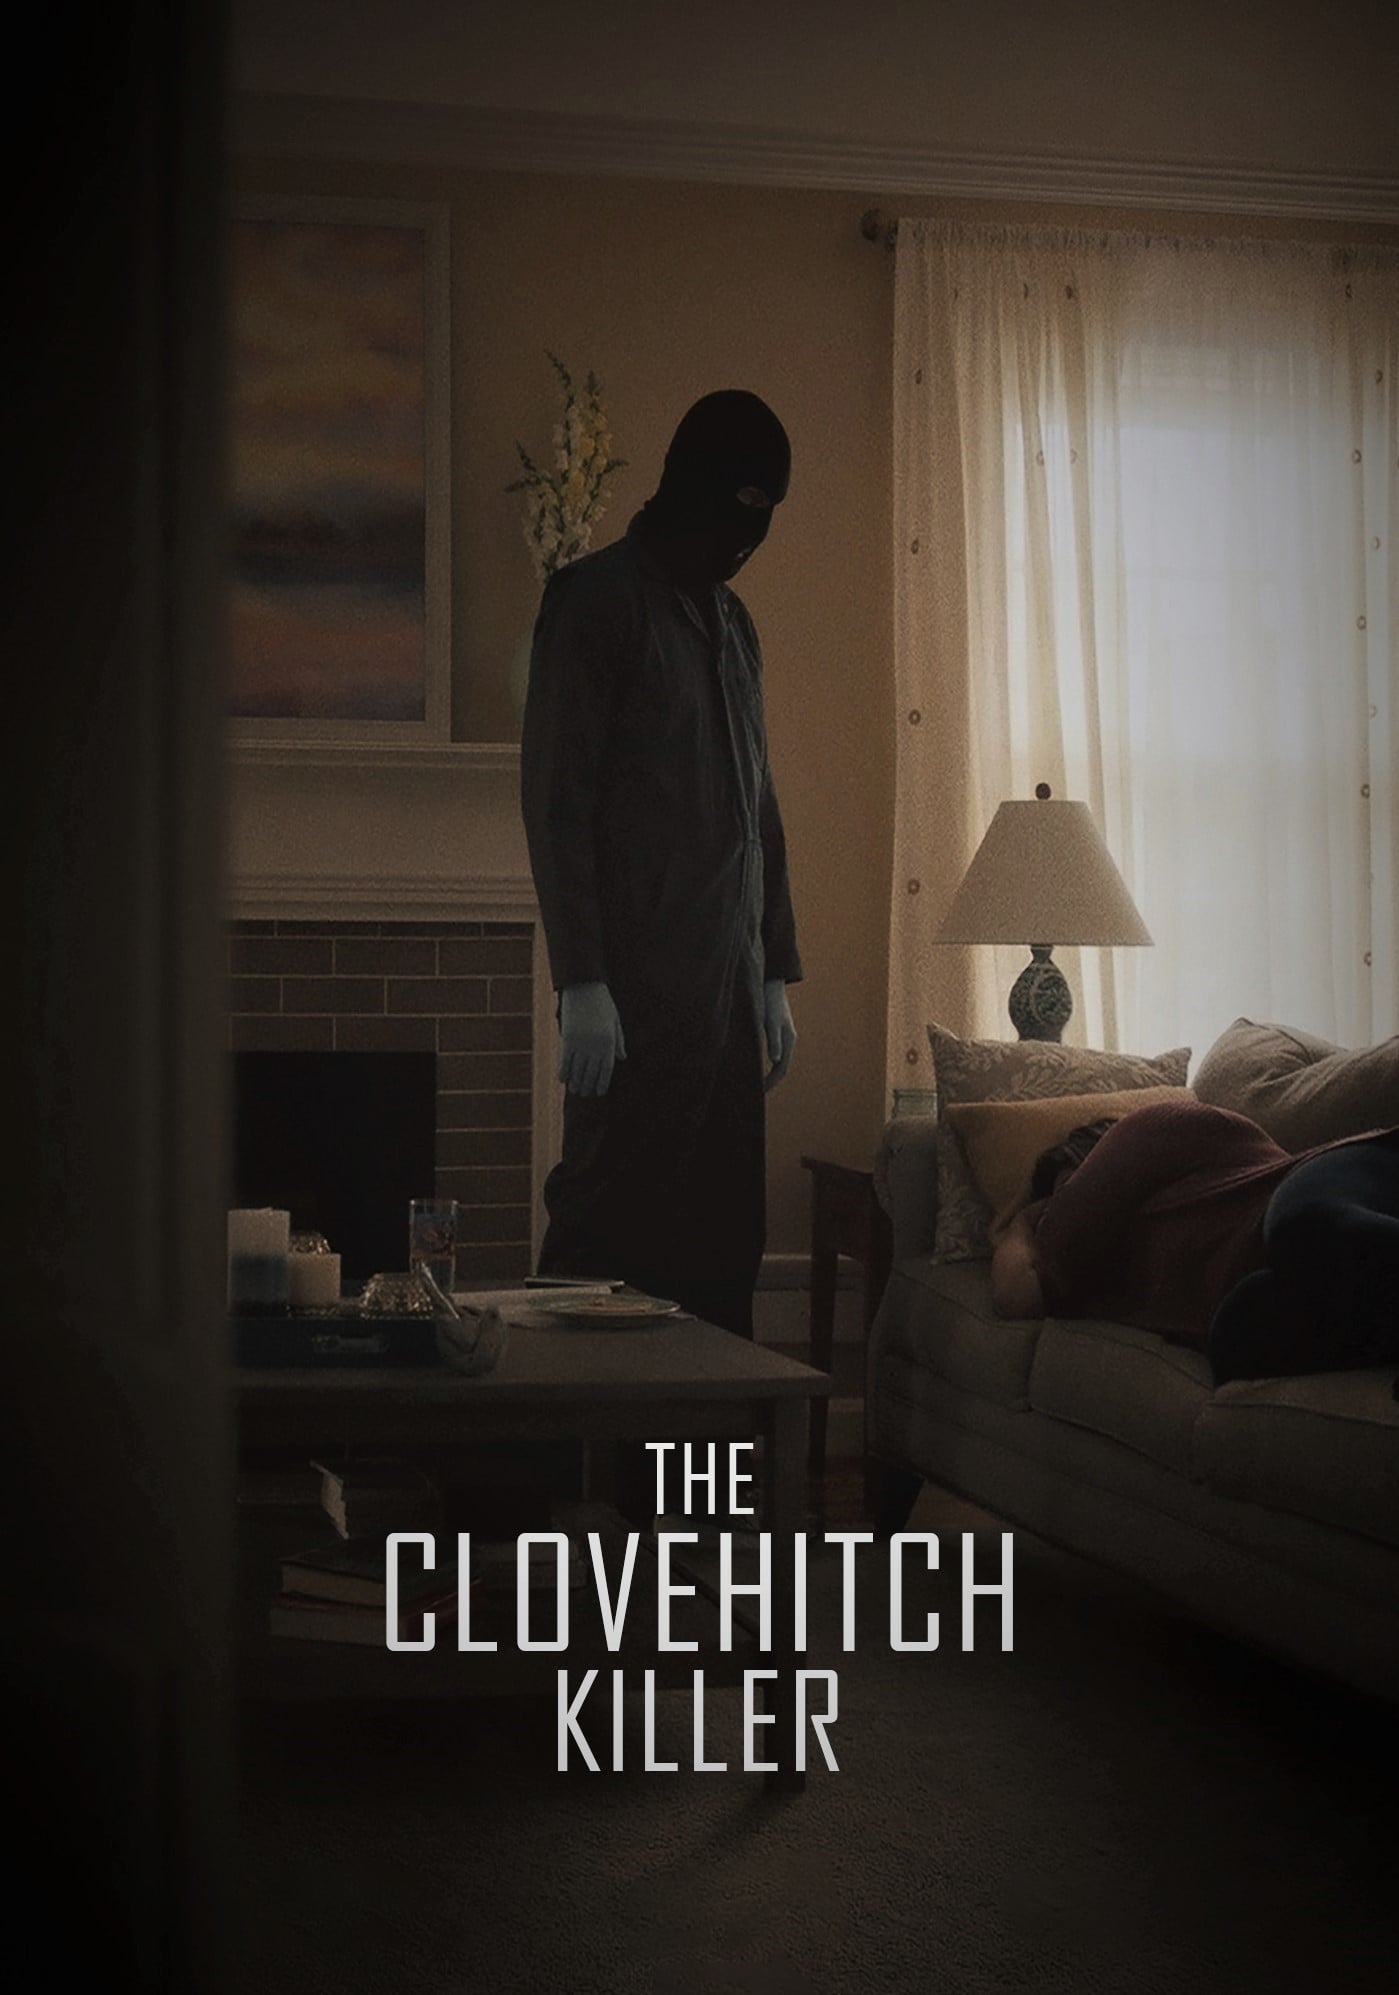 The Clovehitch Killer